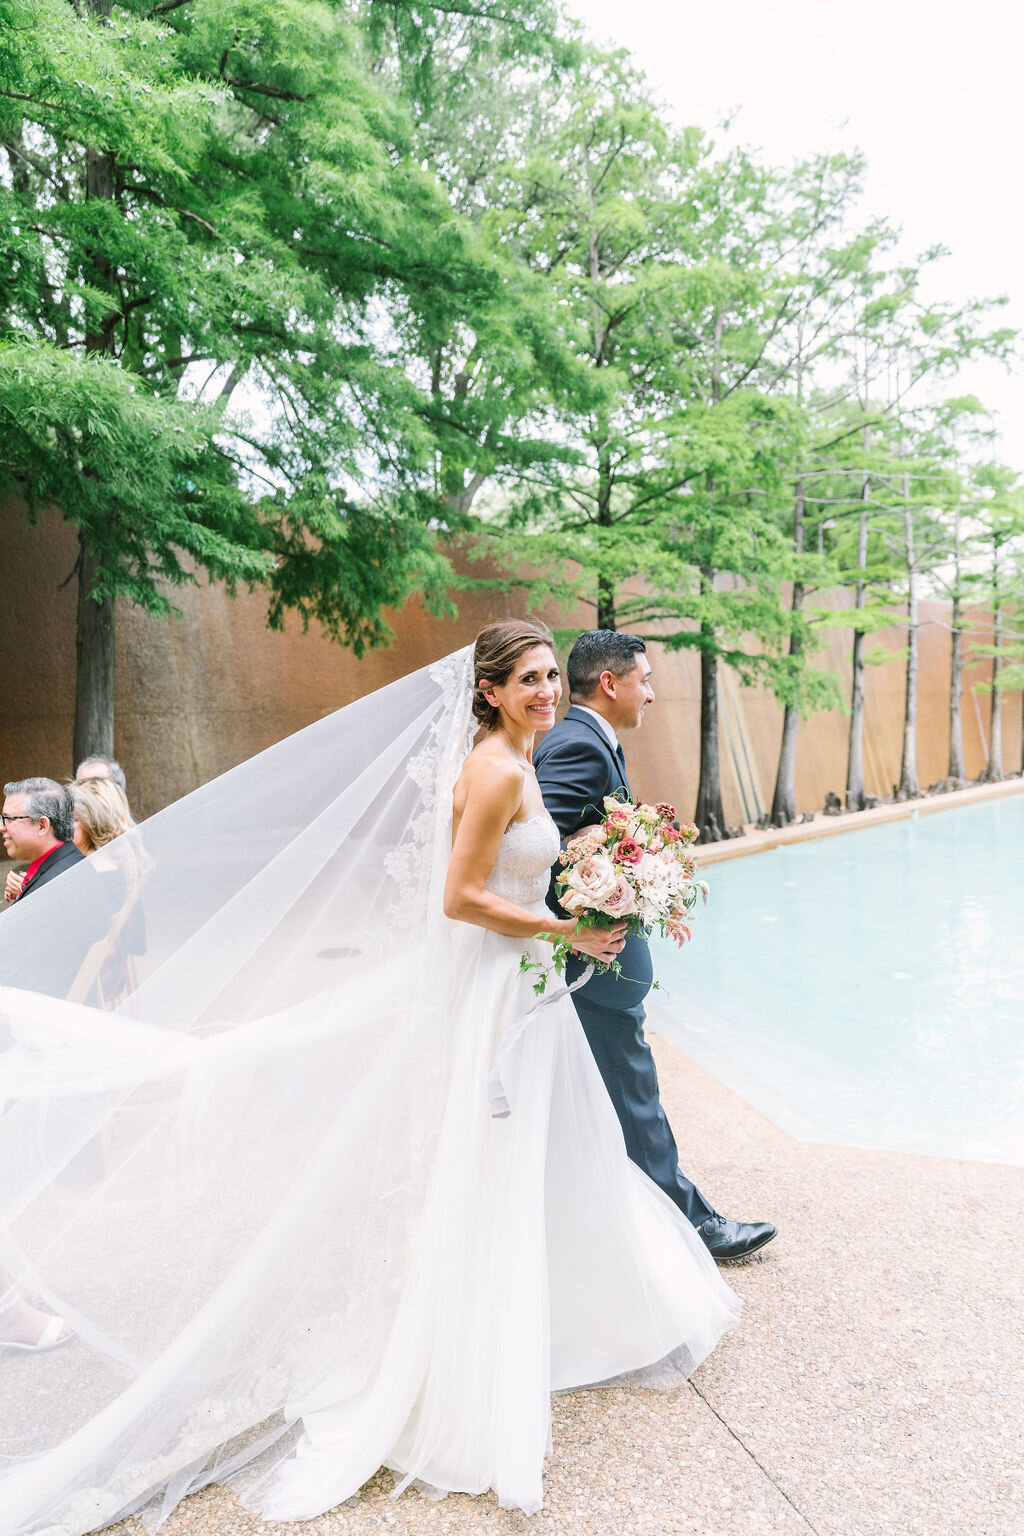 Ellen-Ashton-Photography-Dallas-Wedding-Photographers-Girt-and-gold-events-weddings124.jpg